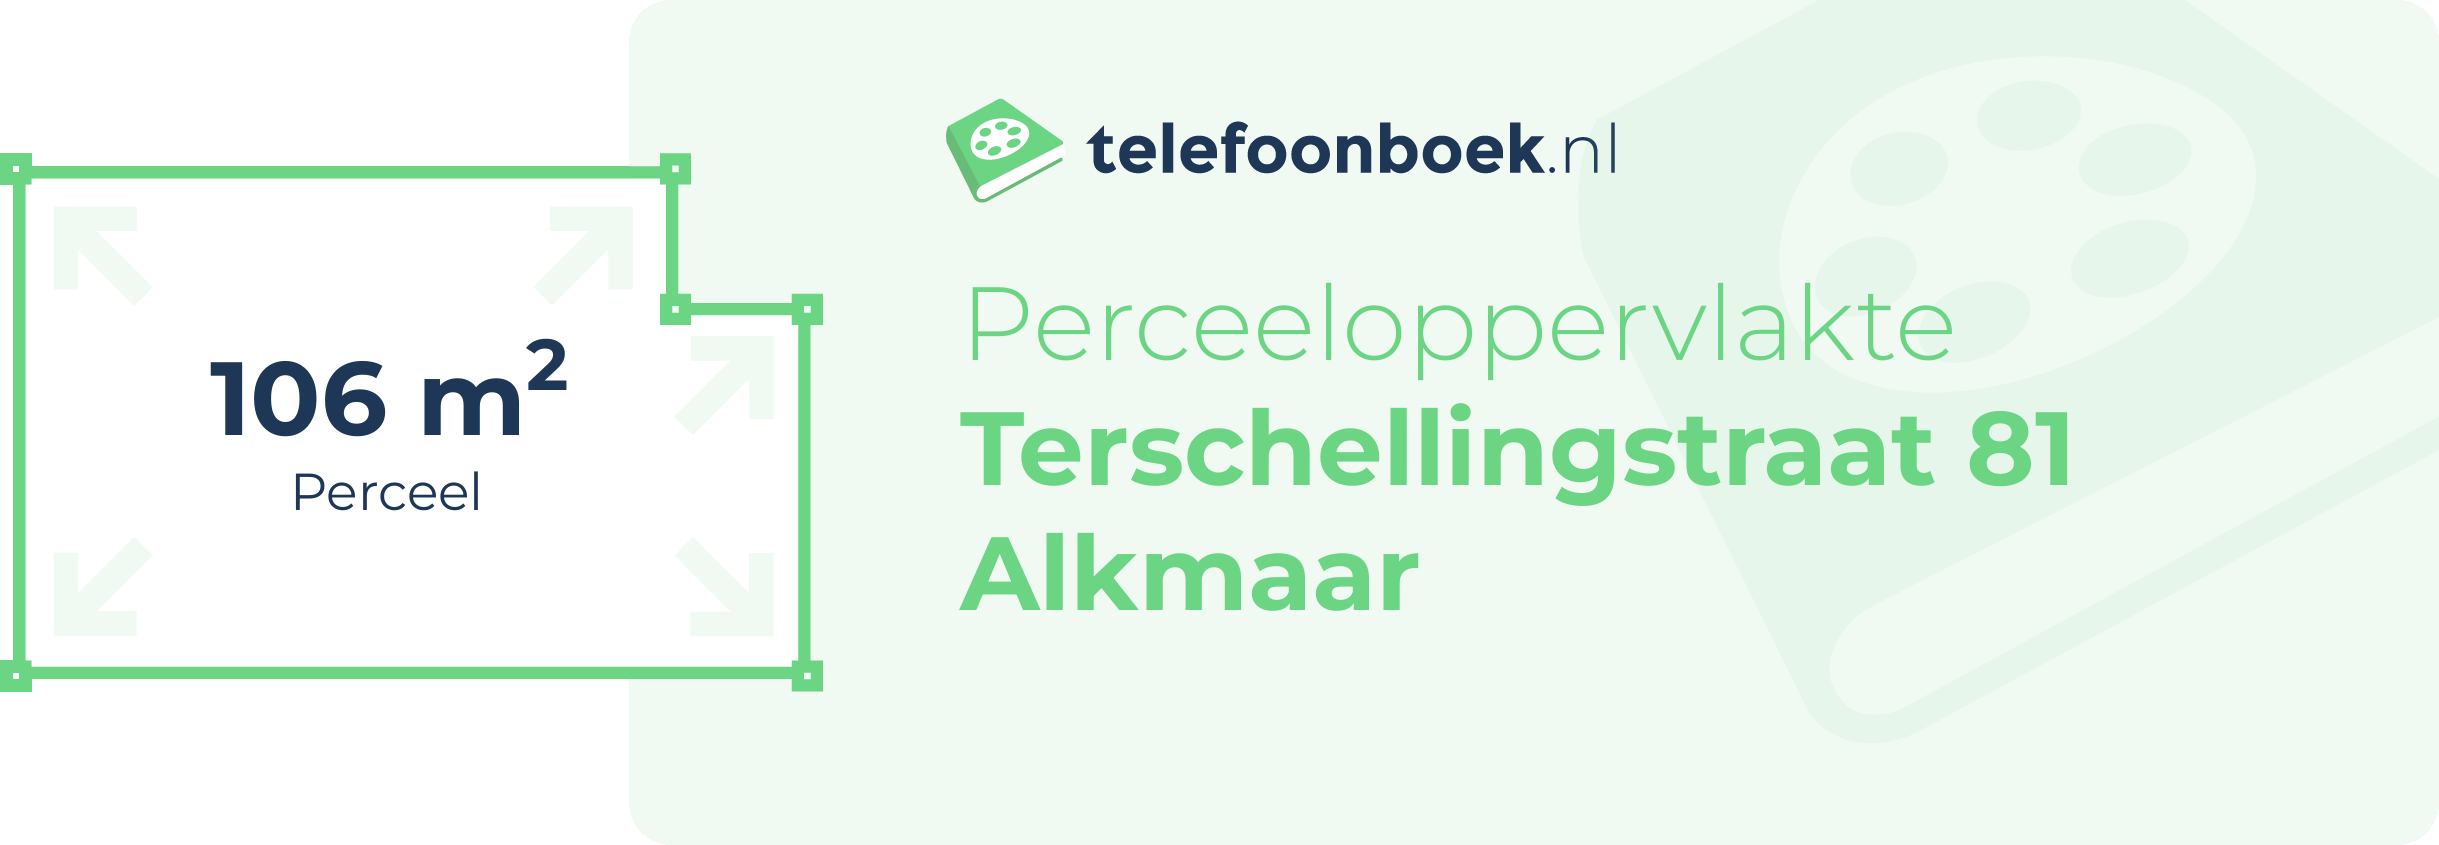 Perceeloppervlakte Terschellingstraat 81 Alkmaar